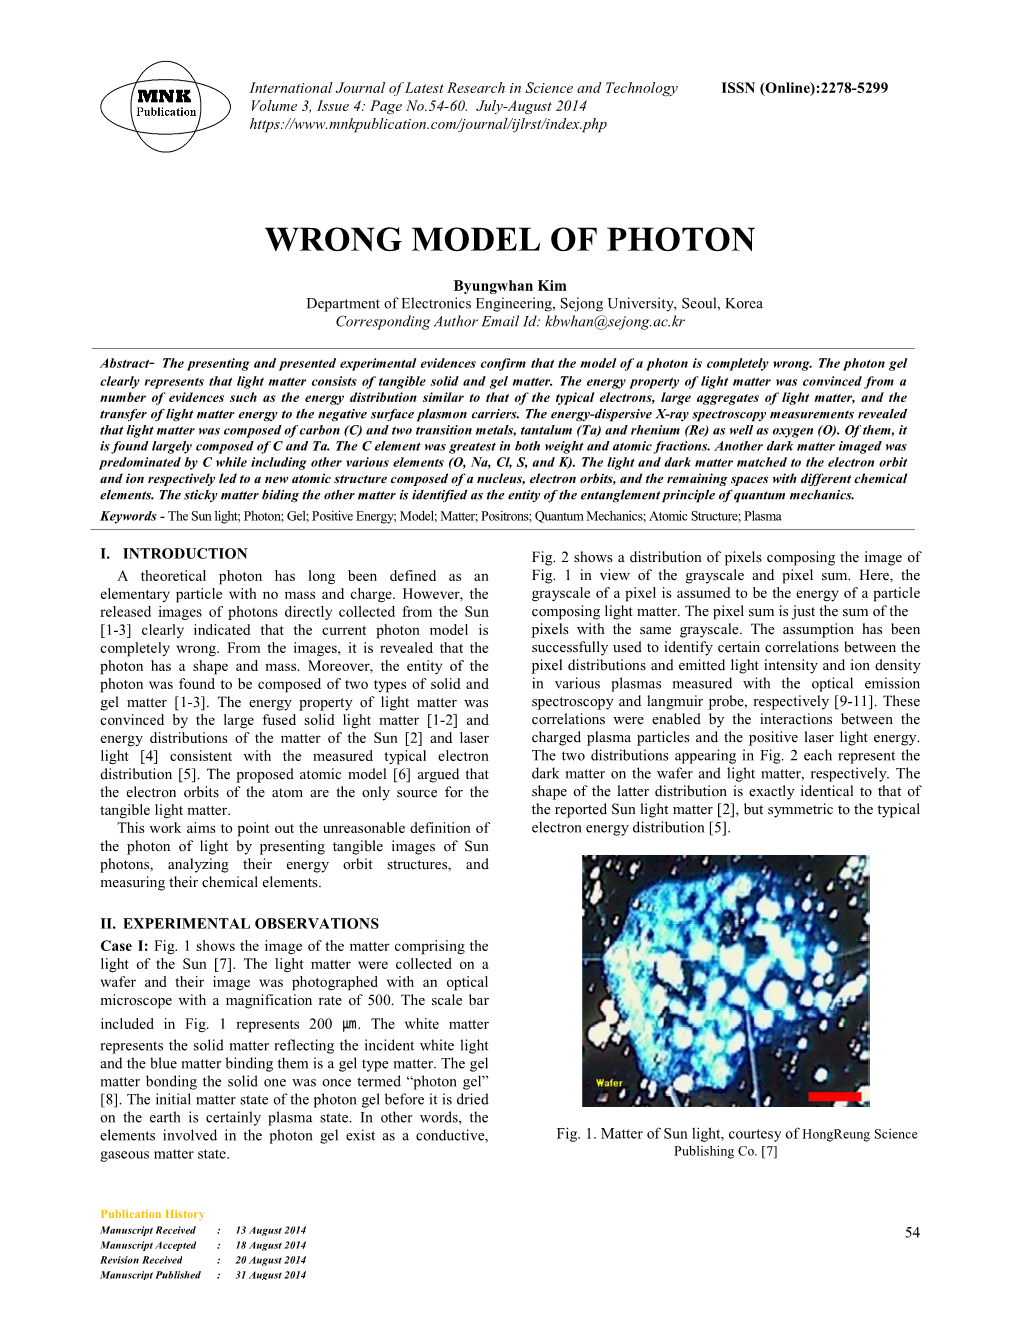 Wrong Model of Photon